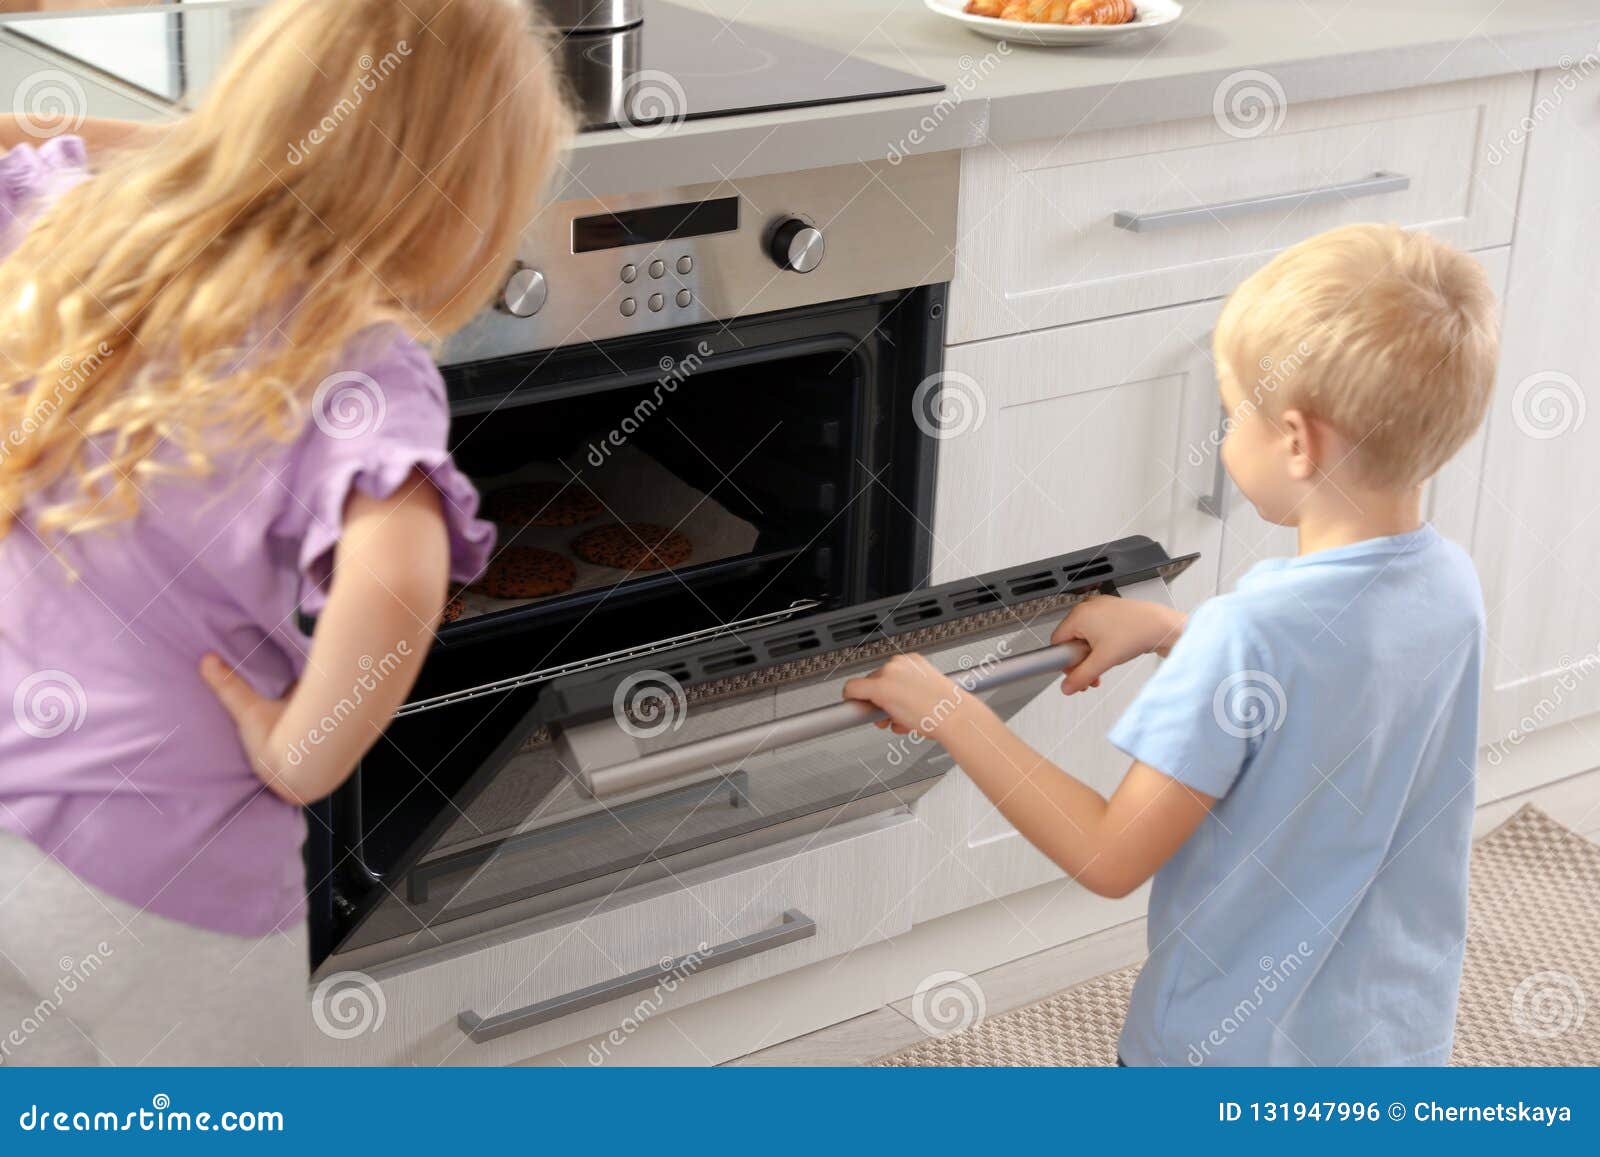 kids baking machine